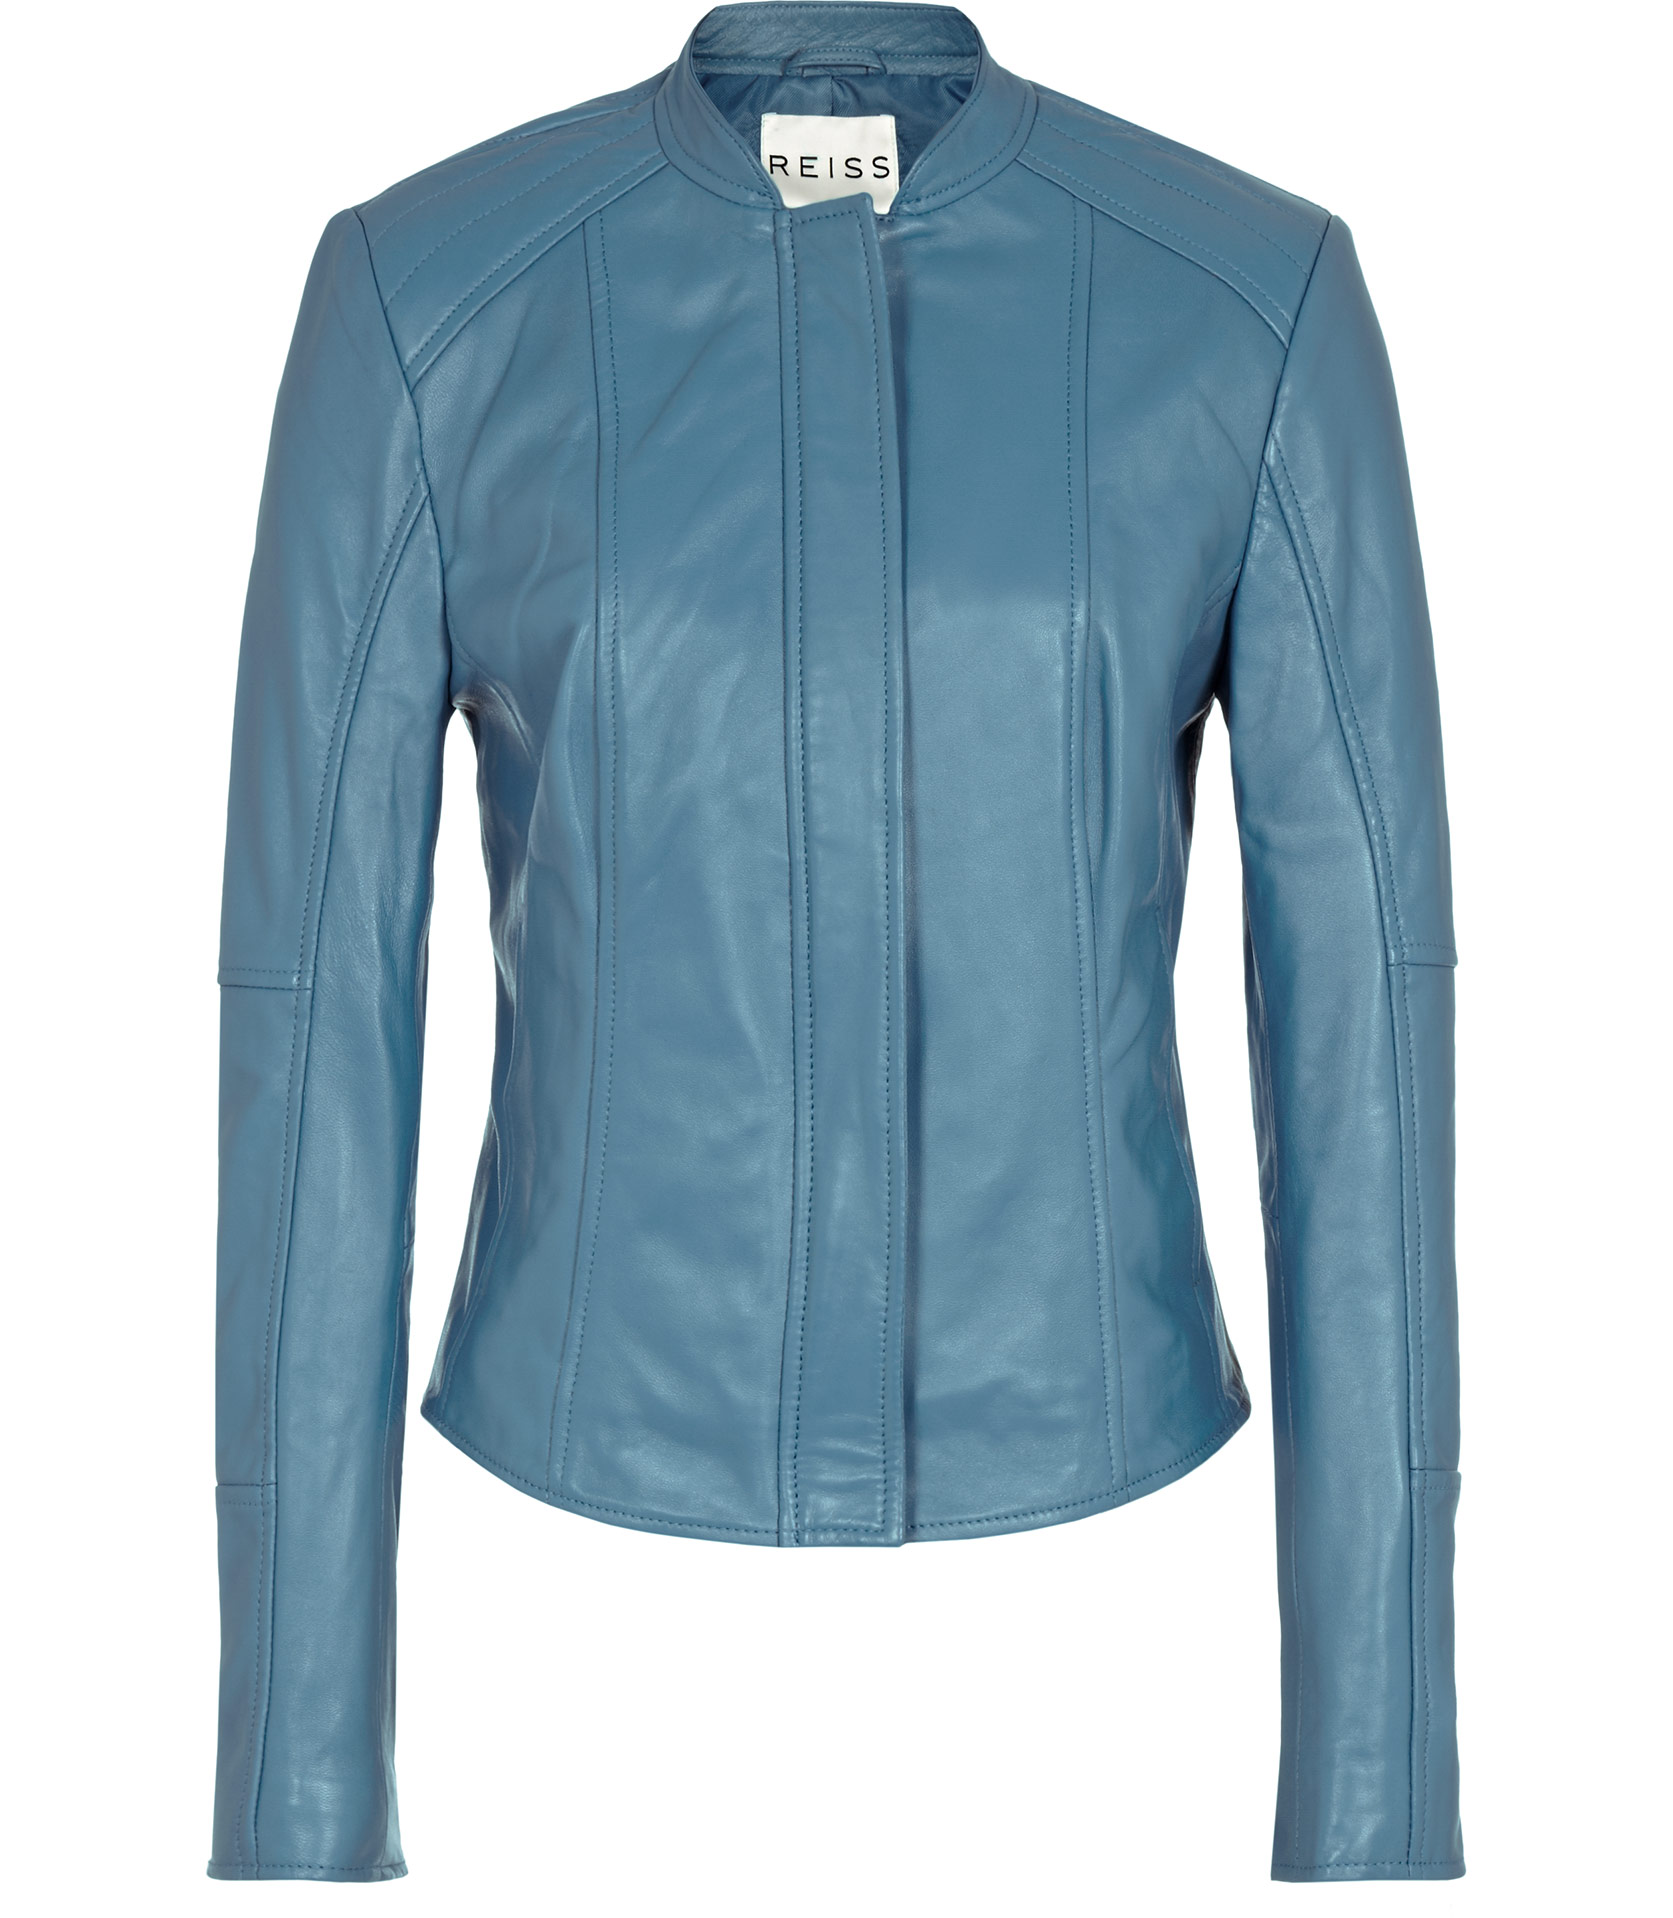 Reiss Soho Fitted Leather Jacket Cornflower Blue - Lyst